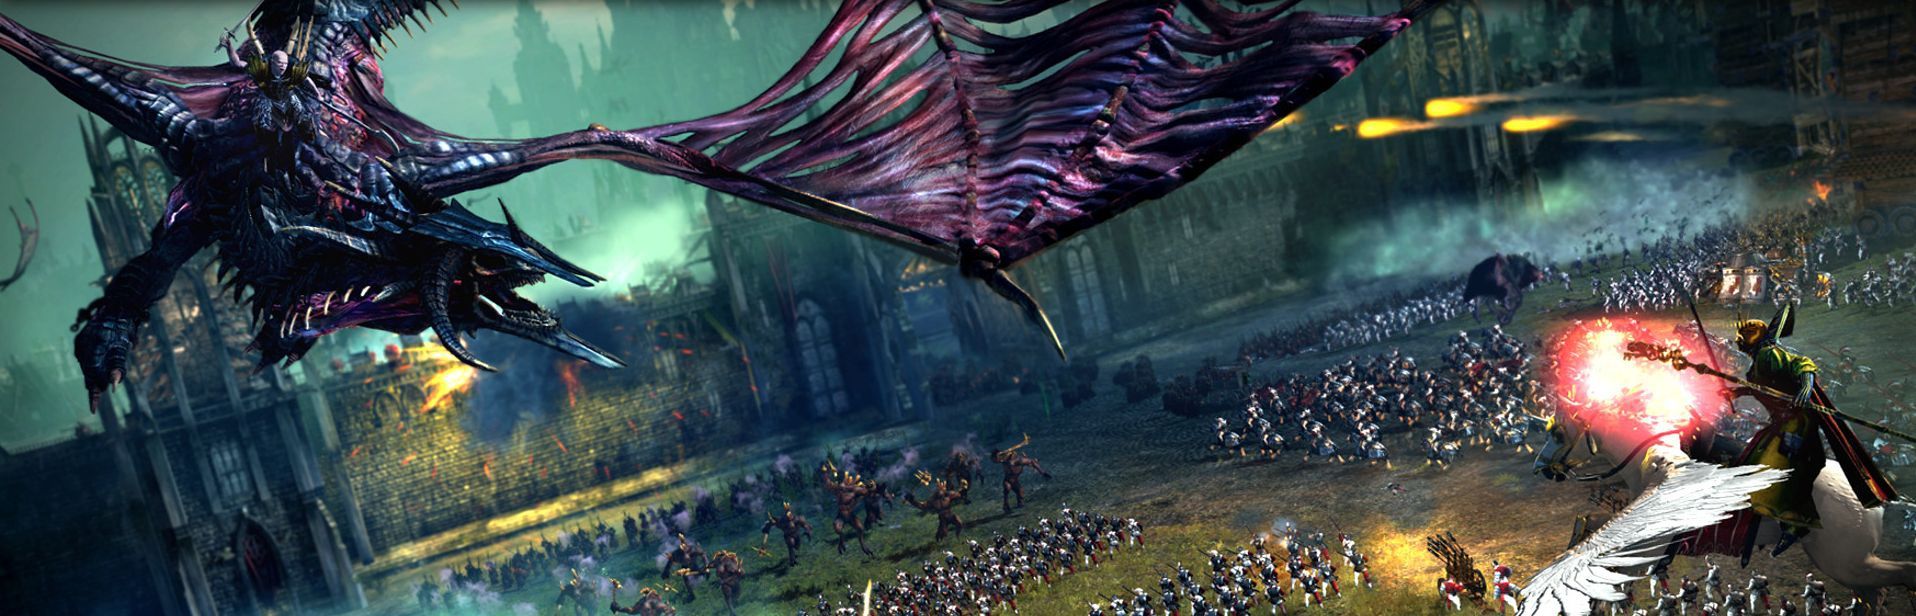 Trailer di lancio per Total War: Warhammer - anche a 360 gradi!